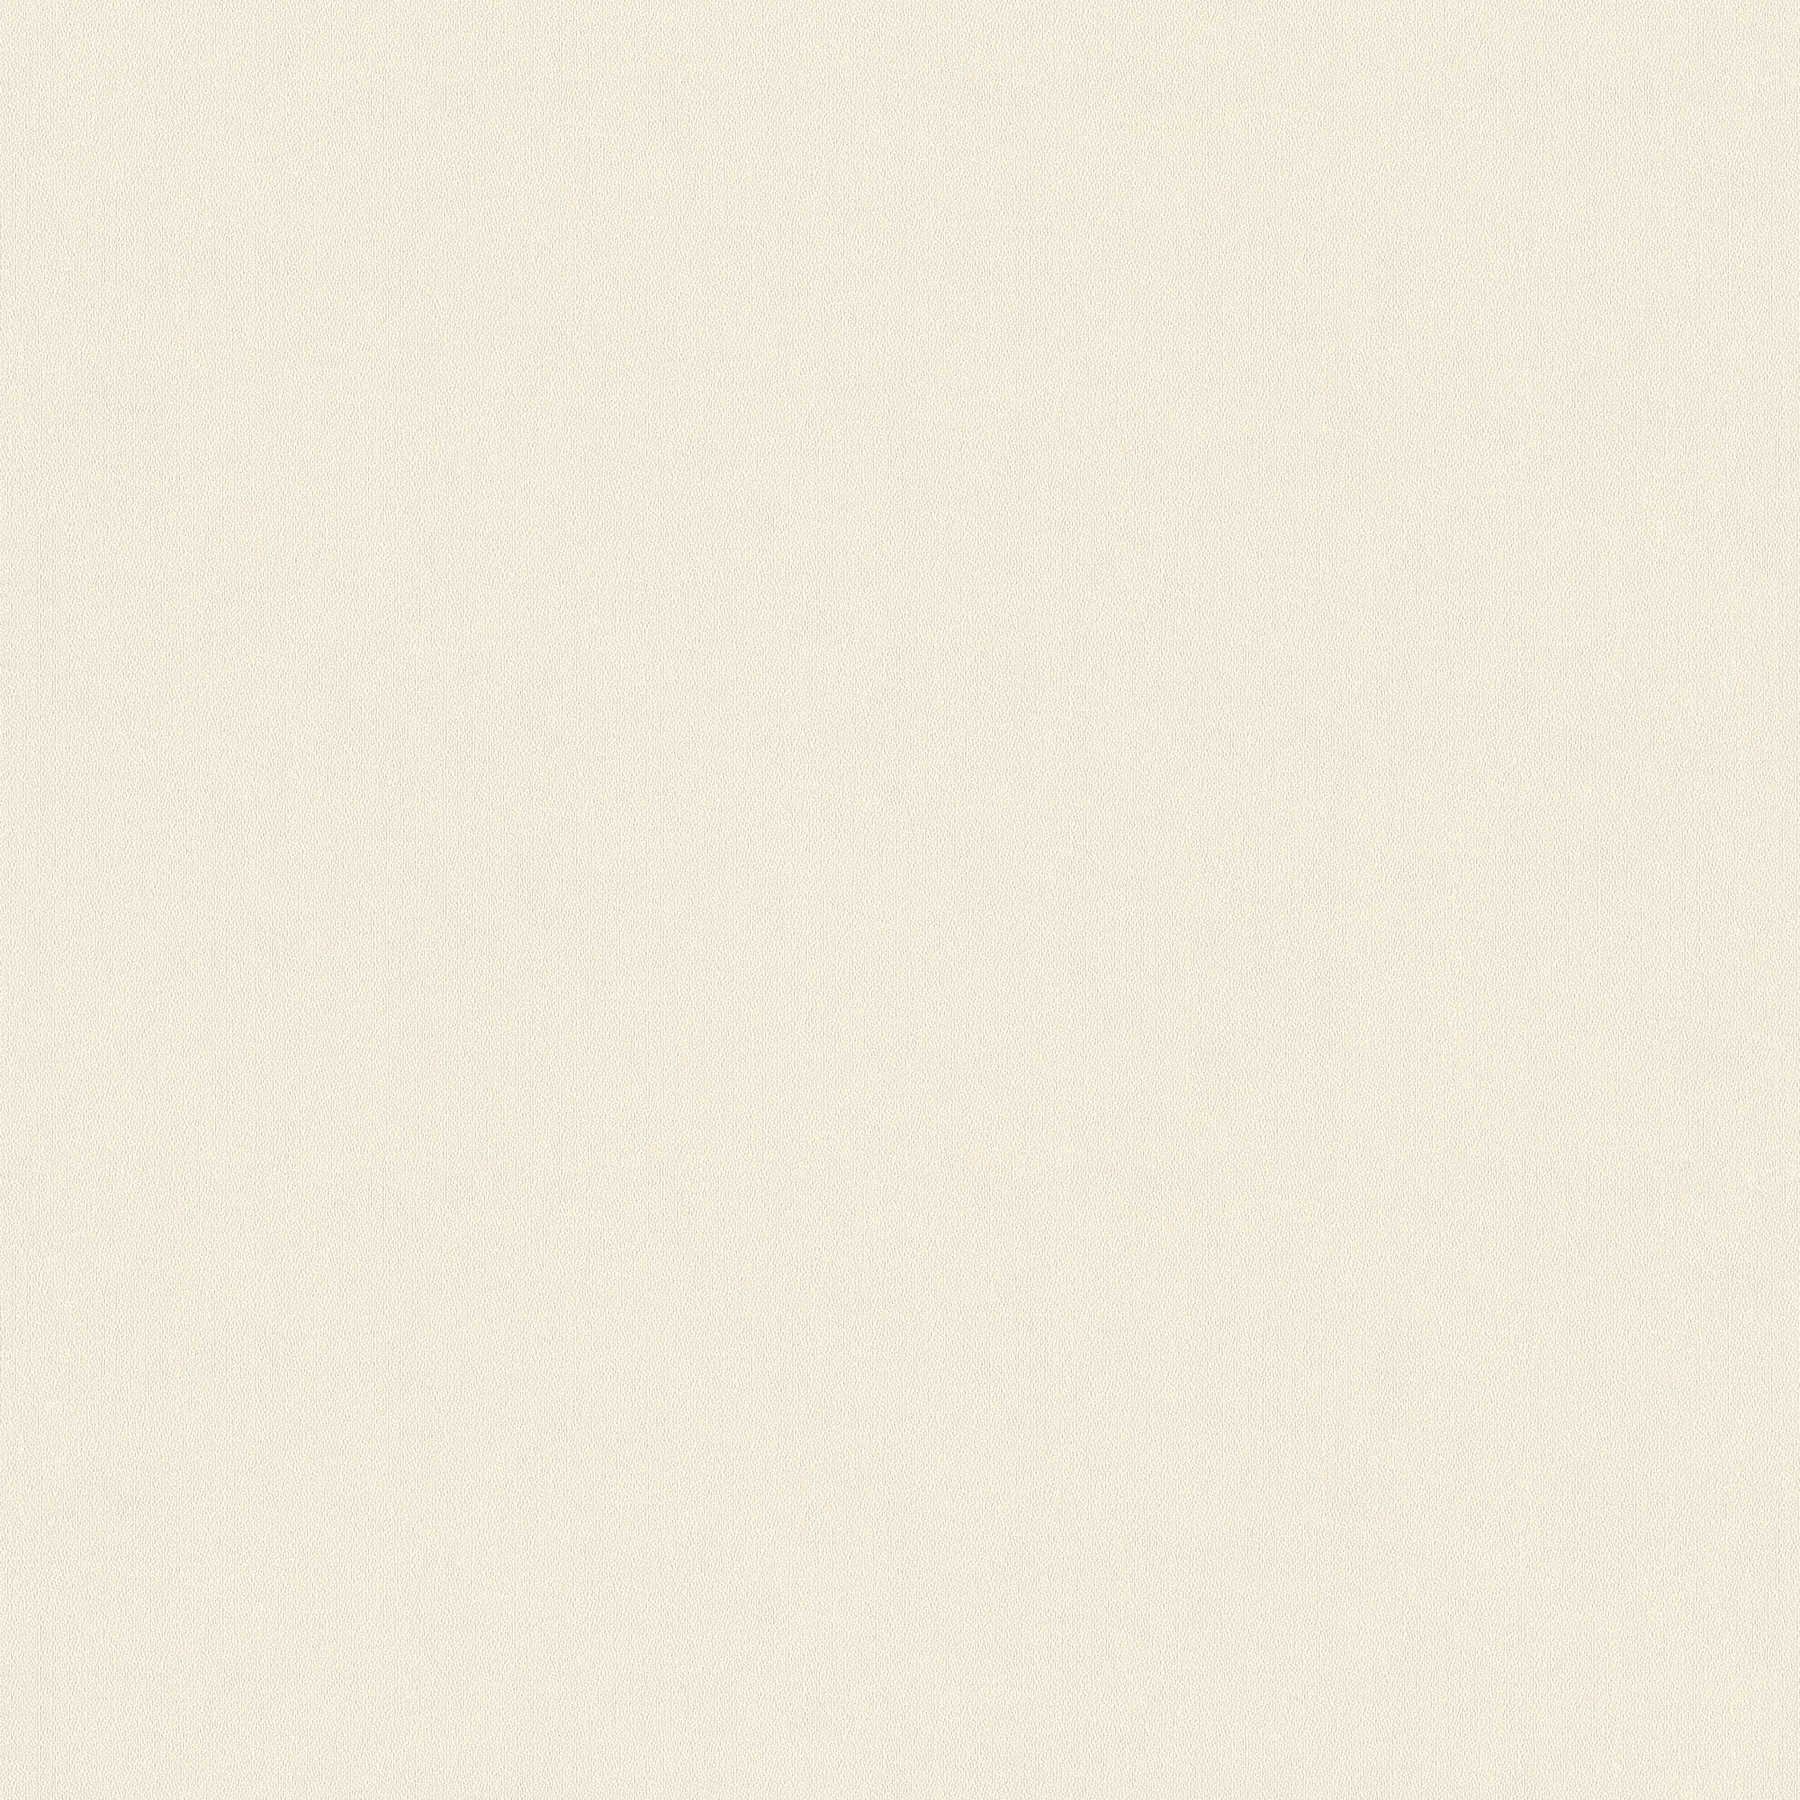 Plain wallpaper non-woven, double width 106cm - beige, cream, grey
